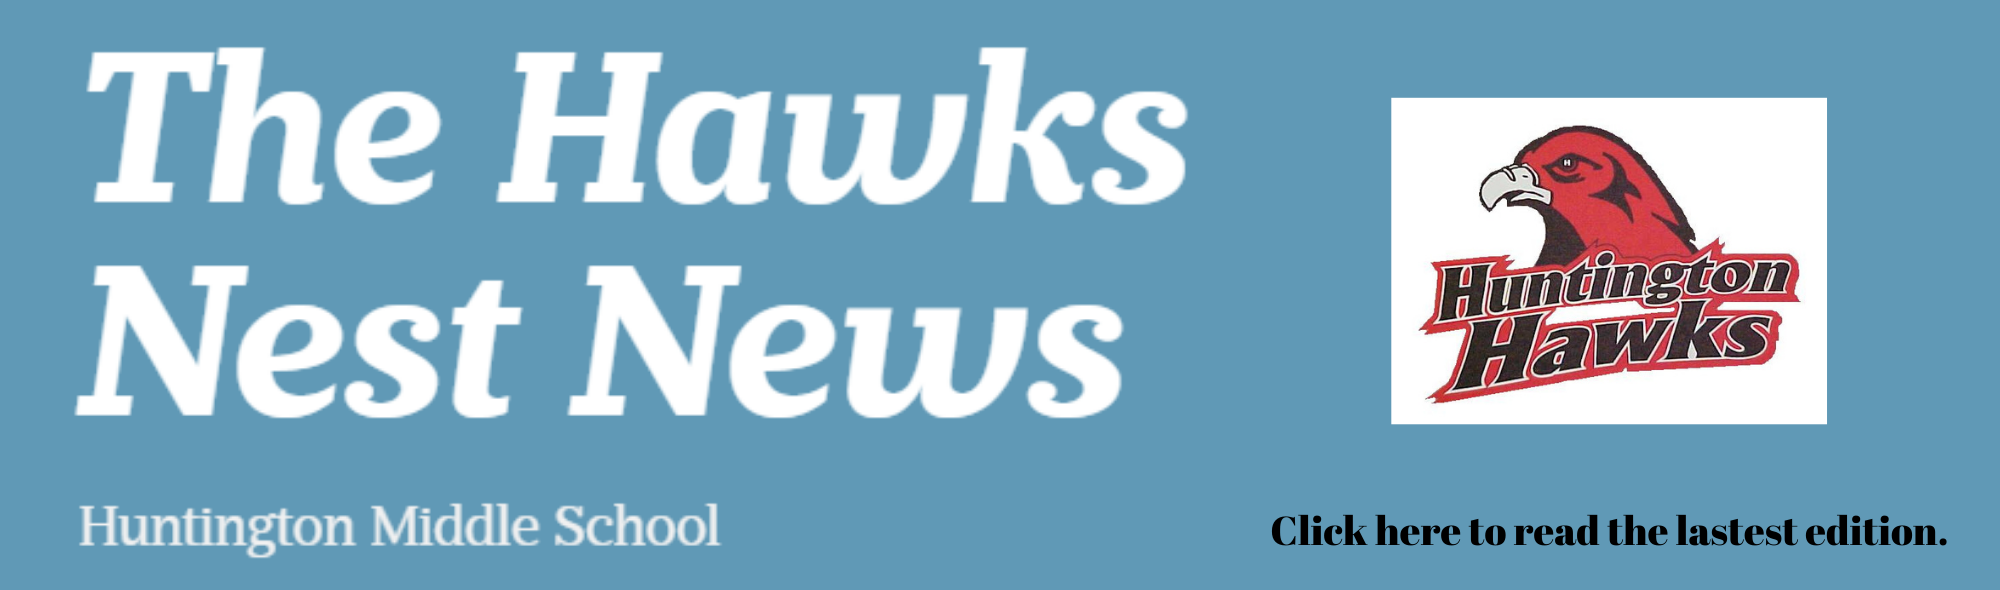 The Hawks Nest News